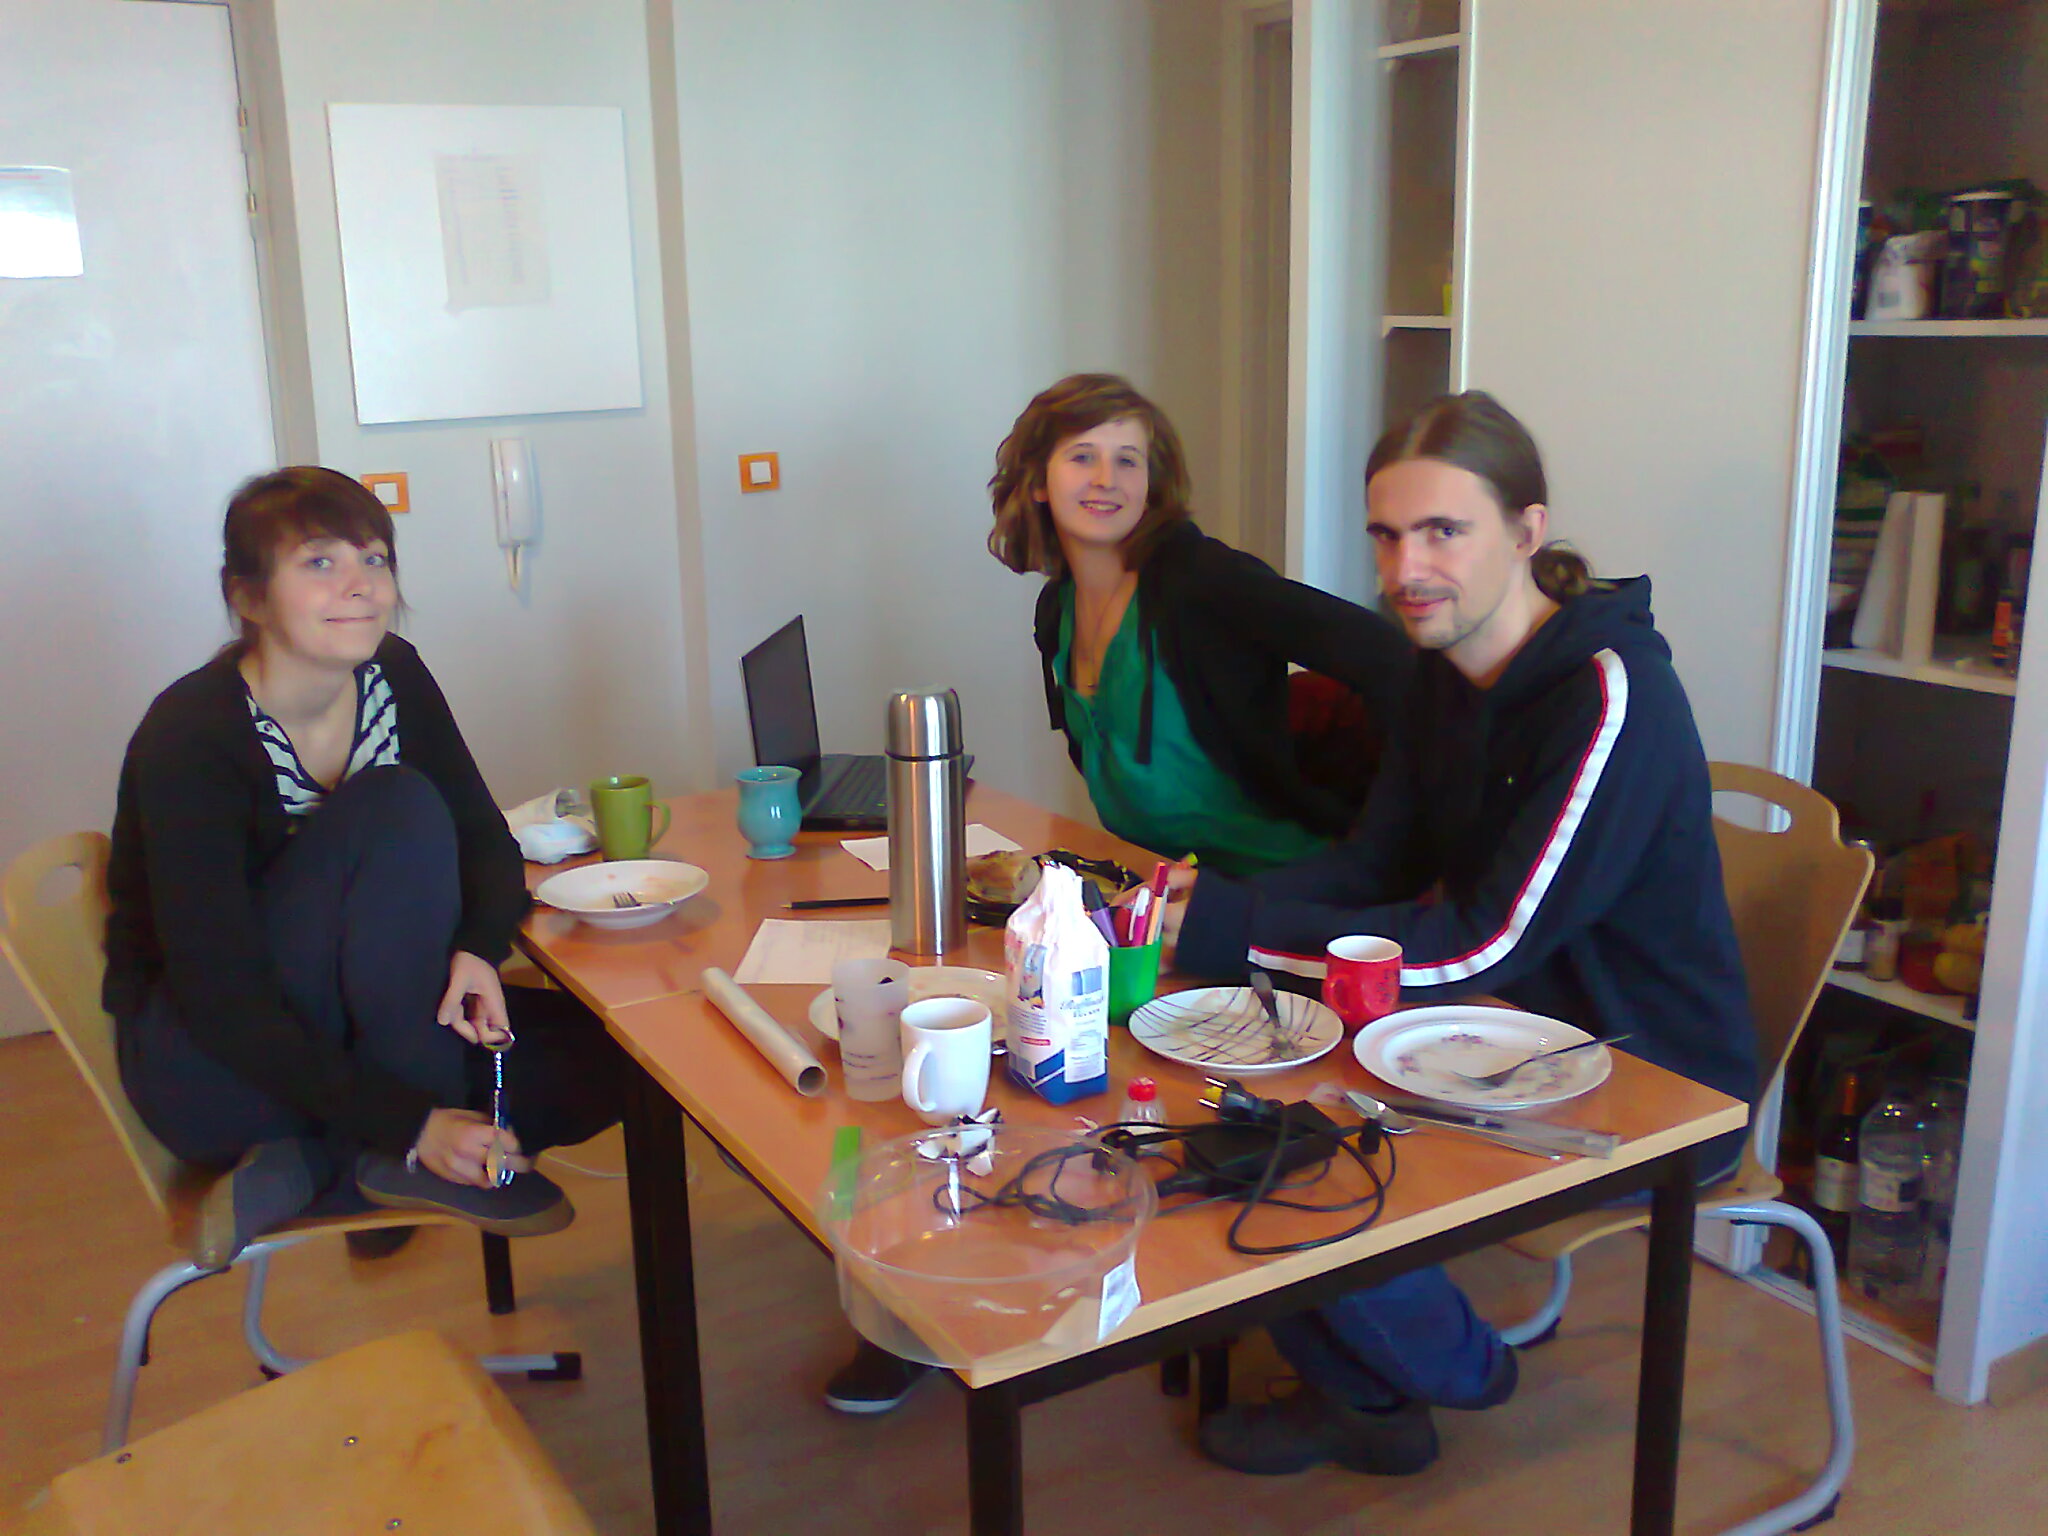 Kaffeekränzchen avec Anita, Kristin et Andreas.